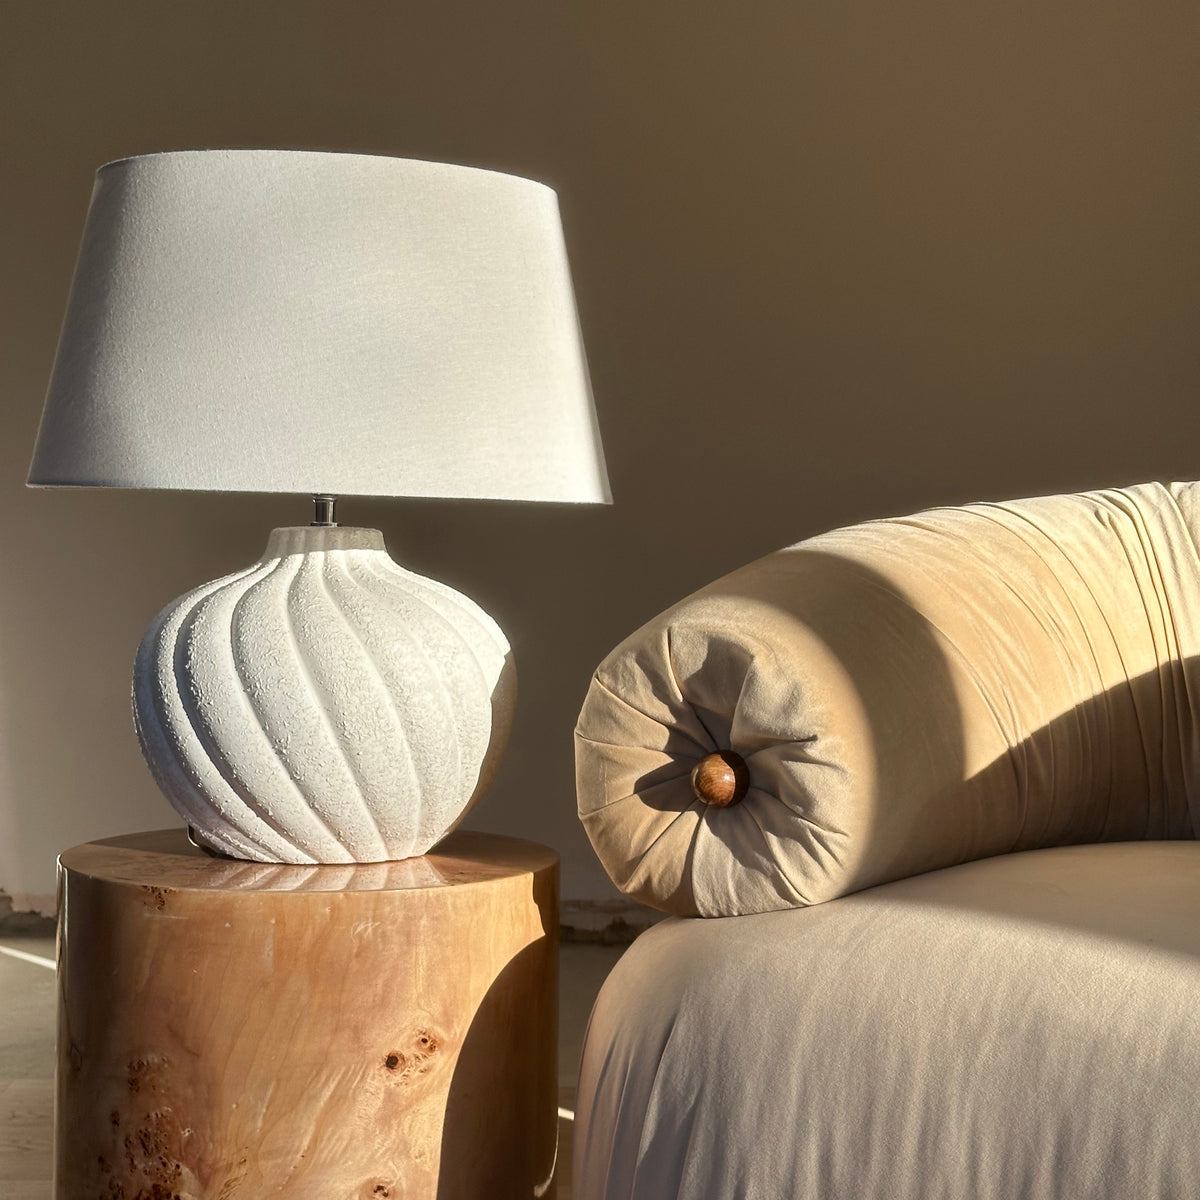 Textured ceramic based table lamp natural shade beside sofa